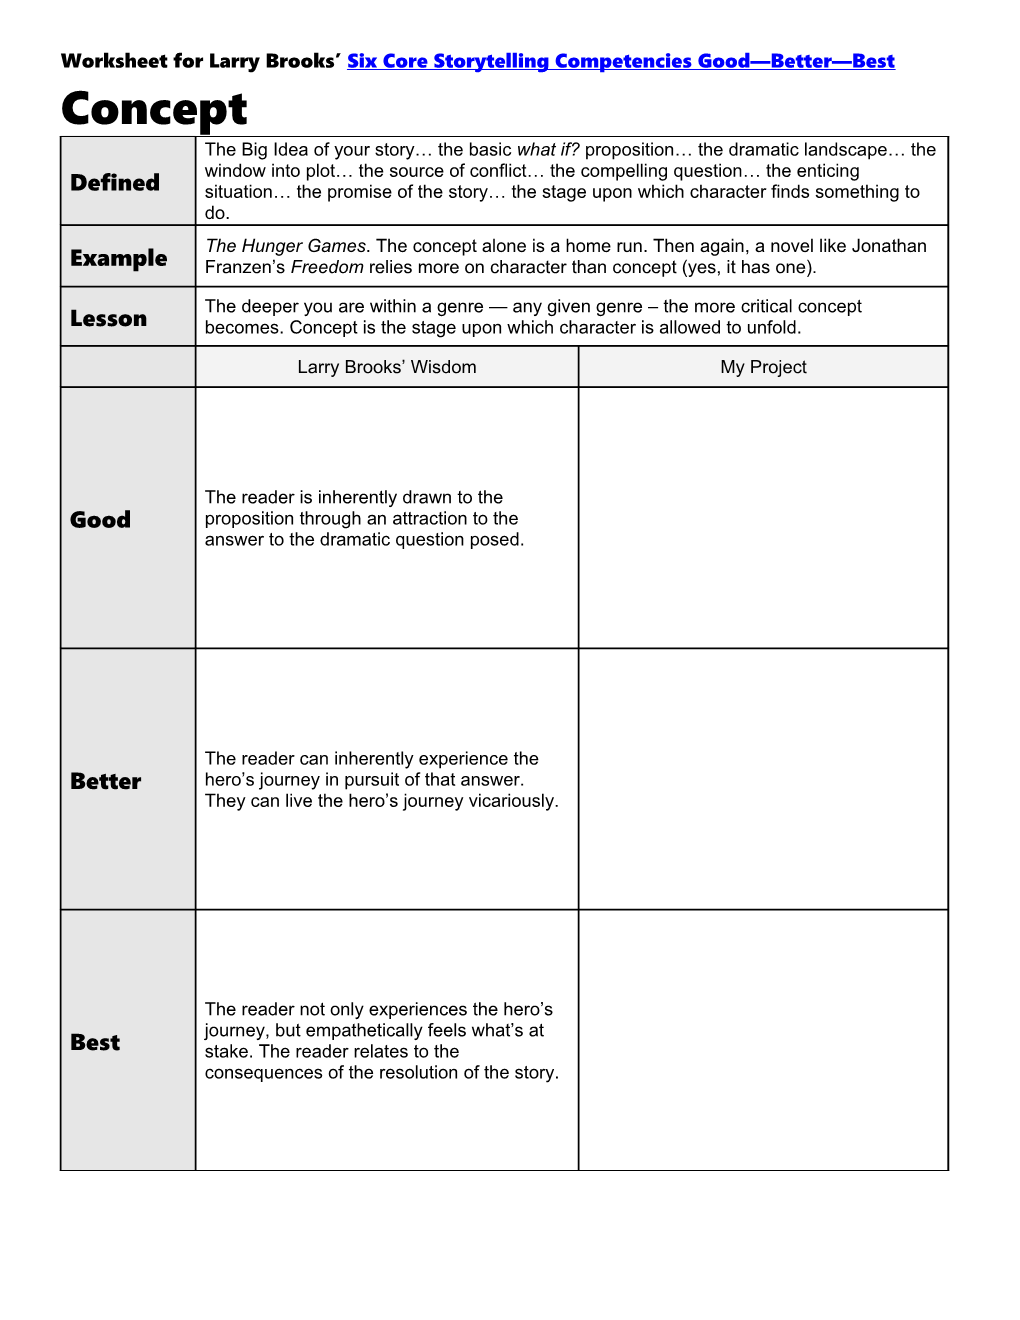 Worksheet for Larry Brooks Six Core Storytelling Competencies Good Better Best